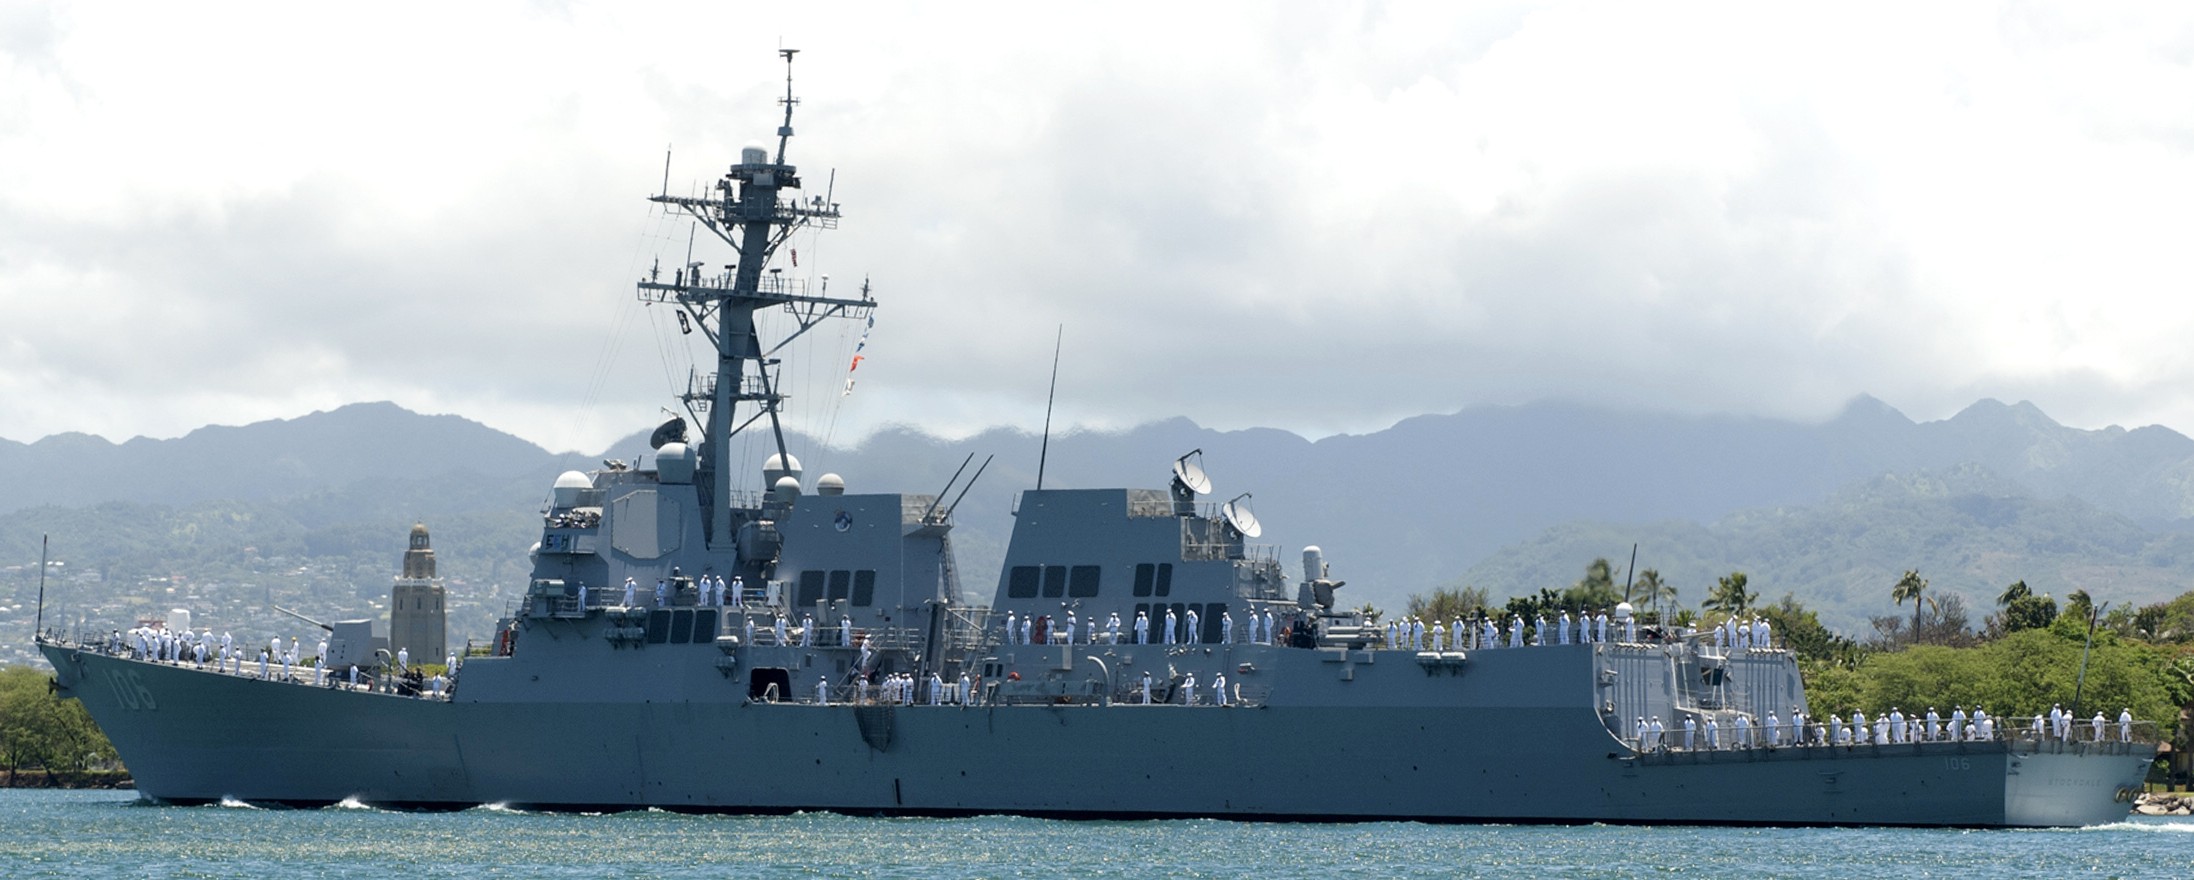 ddg-106 uss stockdale arleigh burke class guided missile destroyer aegis us navy rimpac 2012 hawaii 70